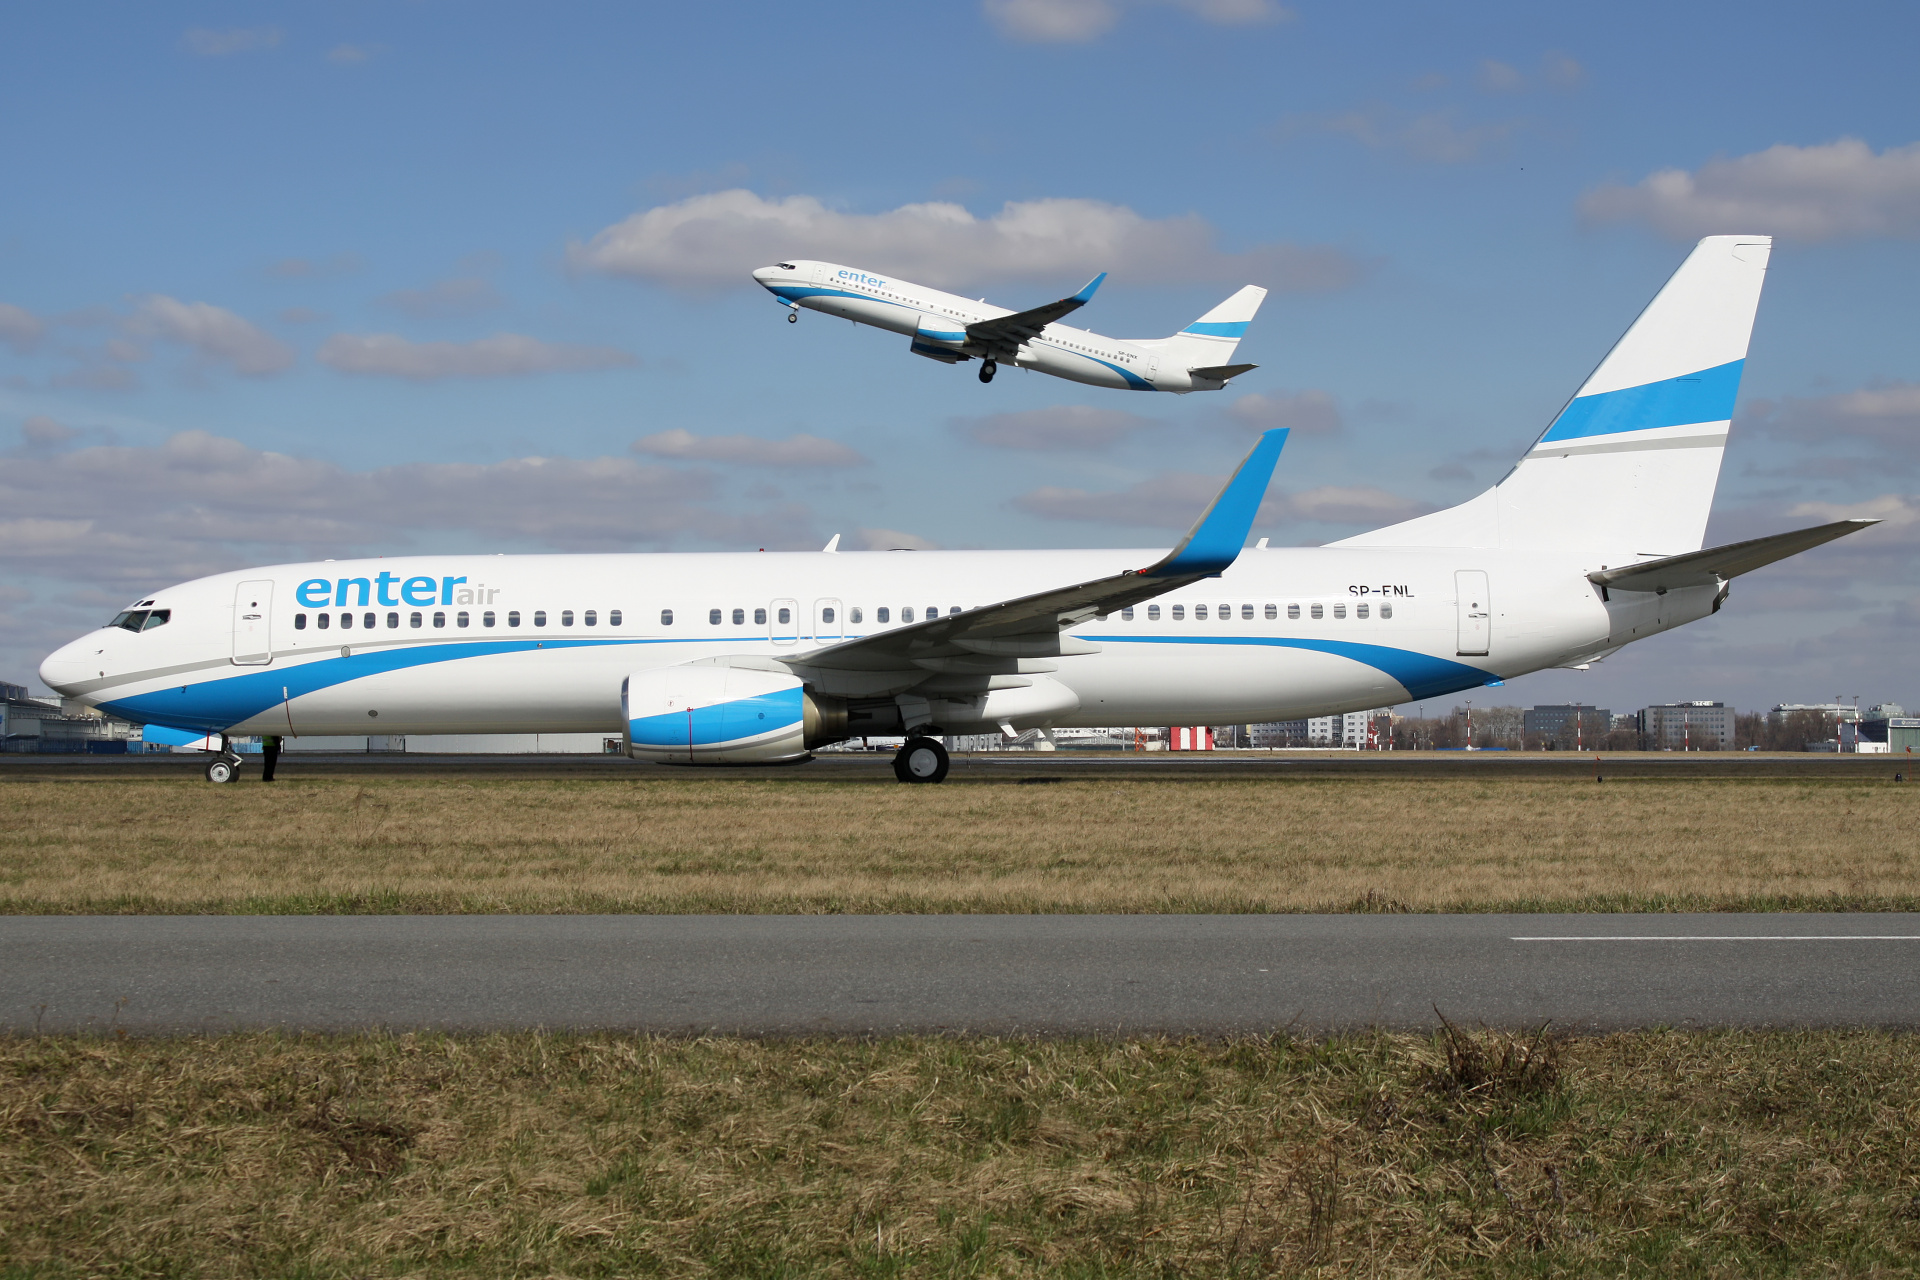 SP-ENL (Samoloty » Spotting na EPWA » Boeing 737-800 » Enter Air)